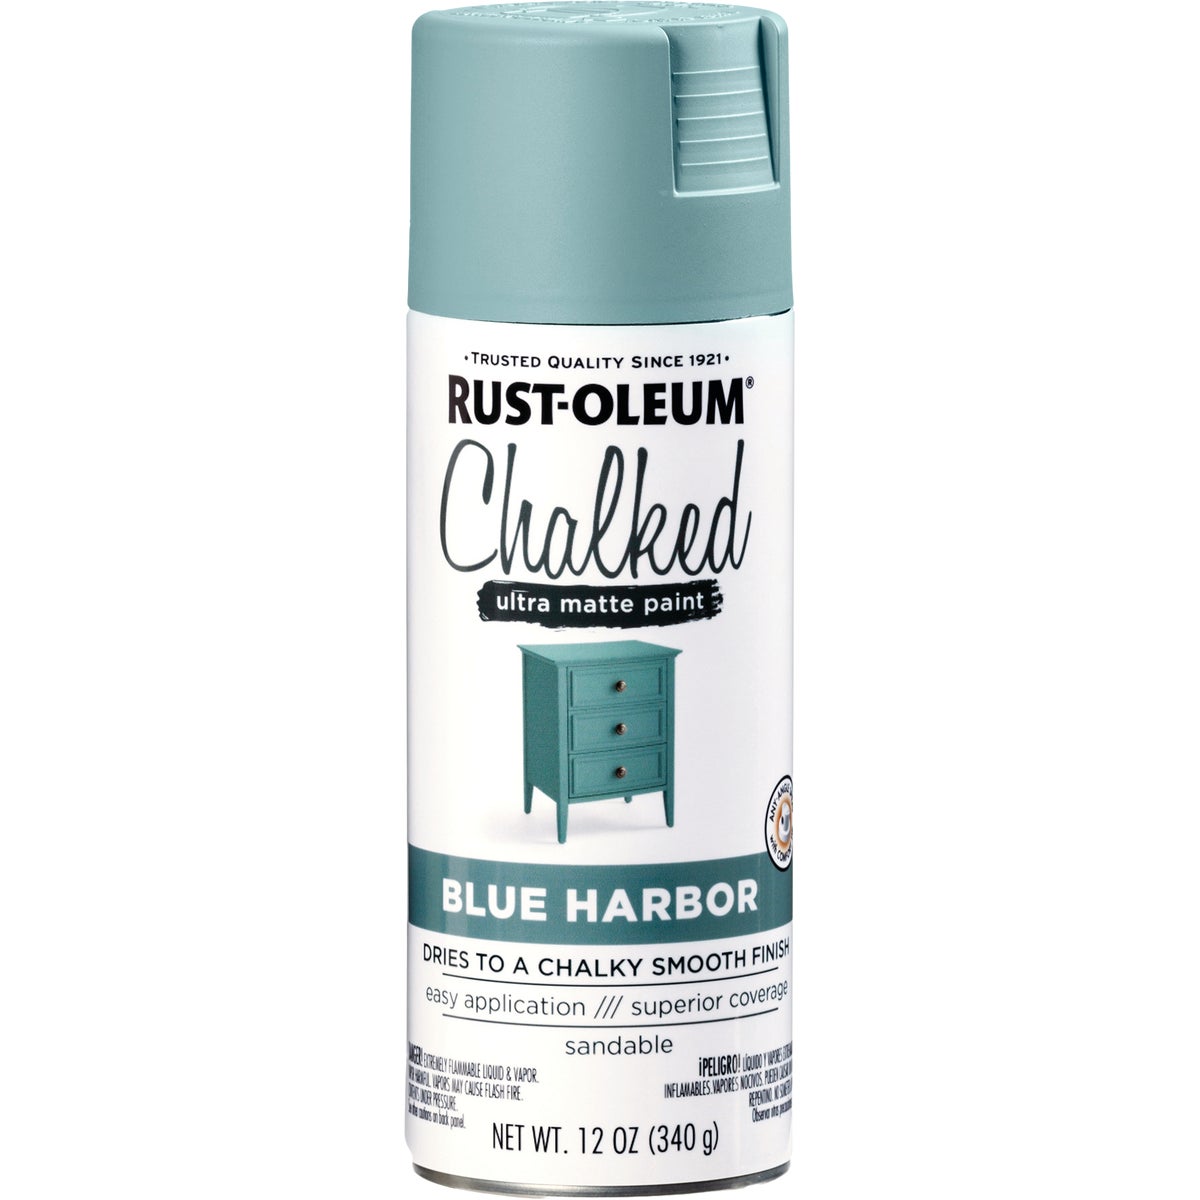 Rust-Oleum Chalked 12 Oz. Ultra Matte Spray Paint, Blue Harbor